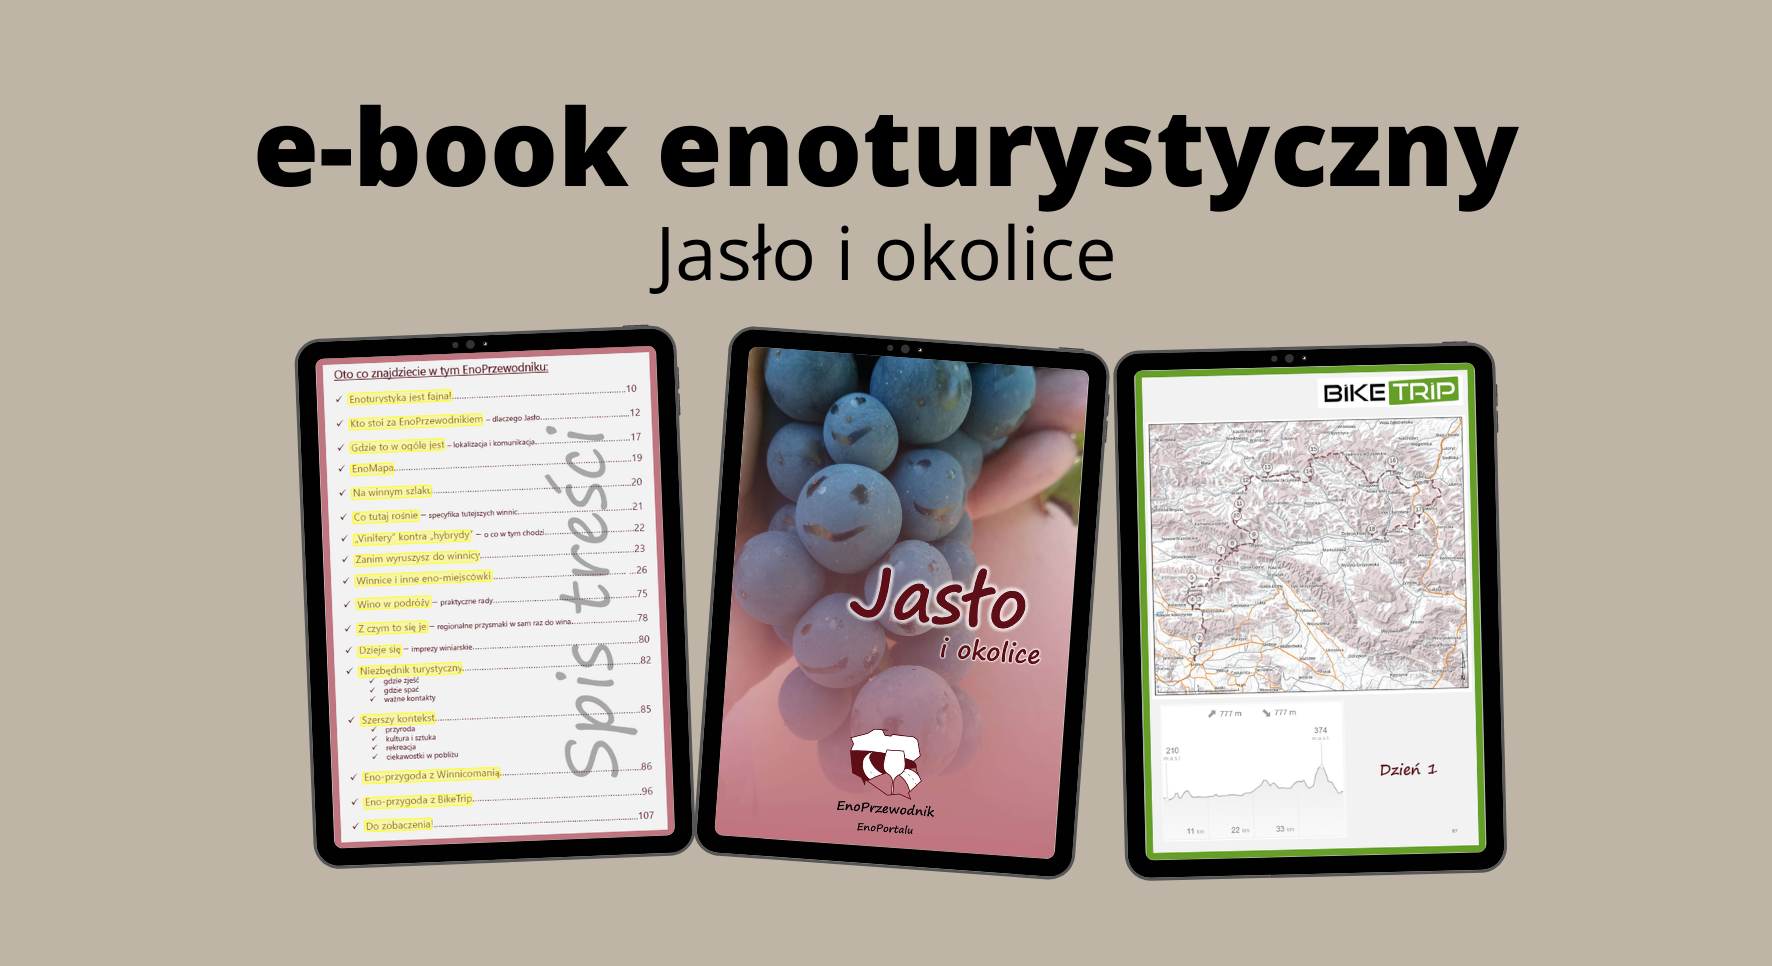 Jasło enotourism e-book and its surroundings – main image